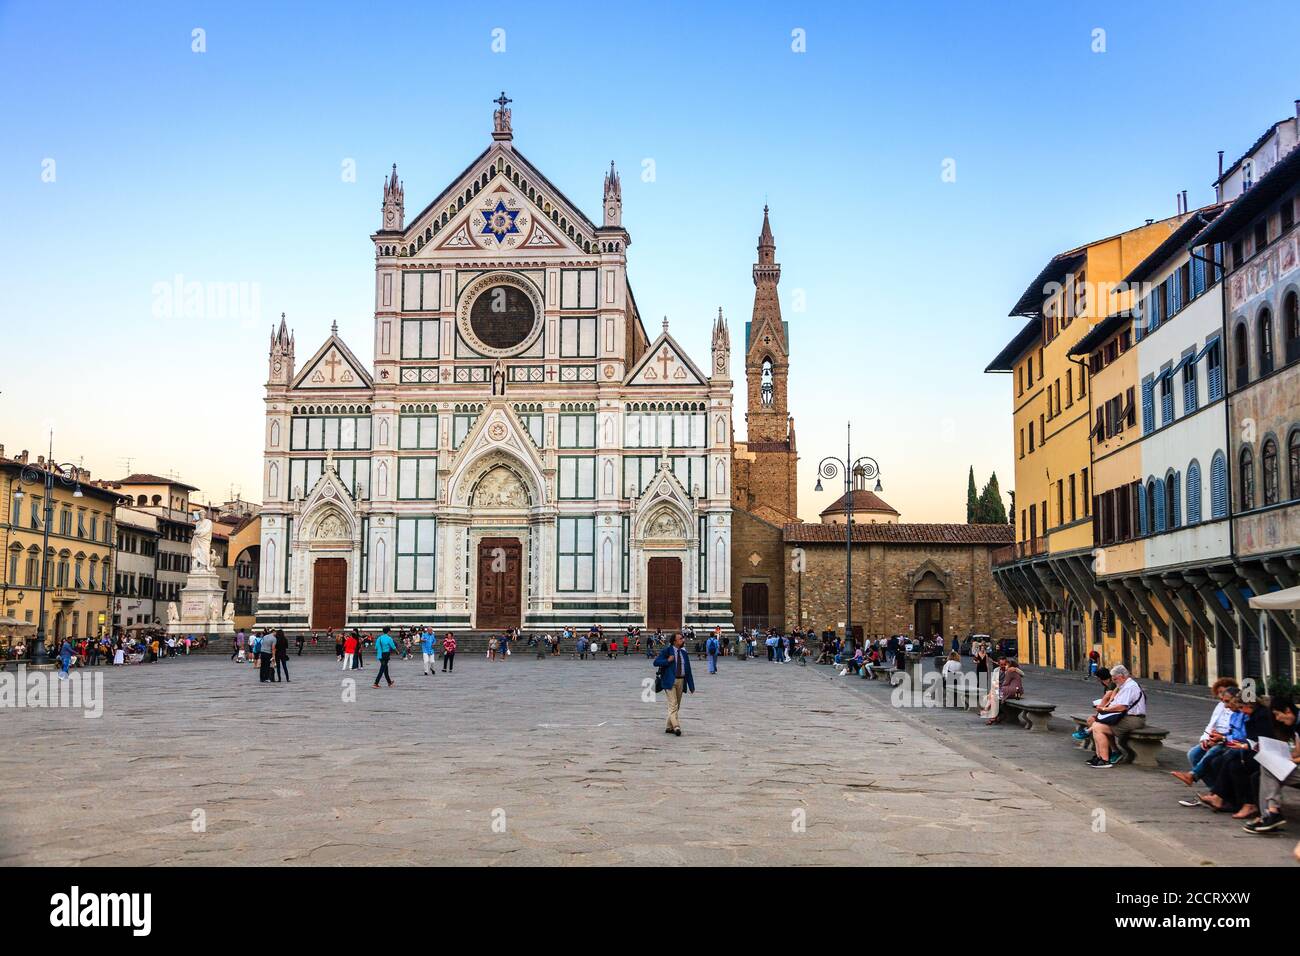 Florence, Italy, September 20, 2015: The Basilica di Santa Croce and the Piazza di Santa Croce in Florence, Italy Stock Photo